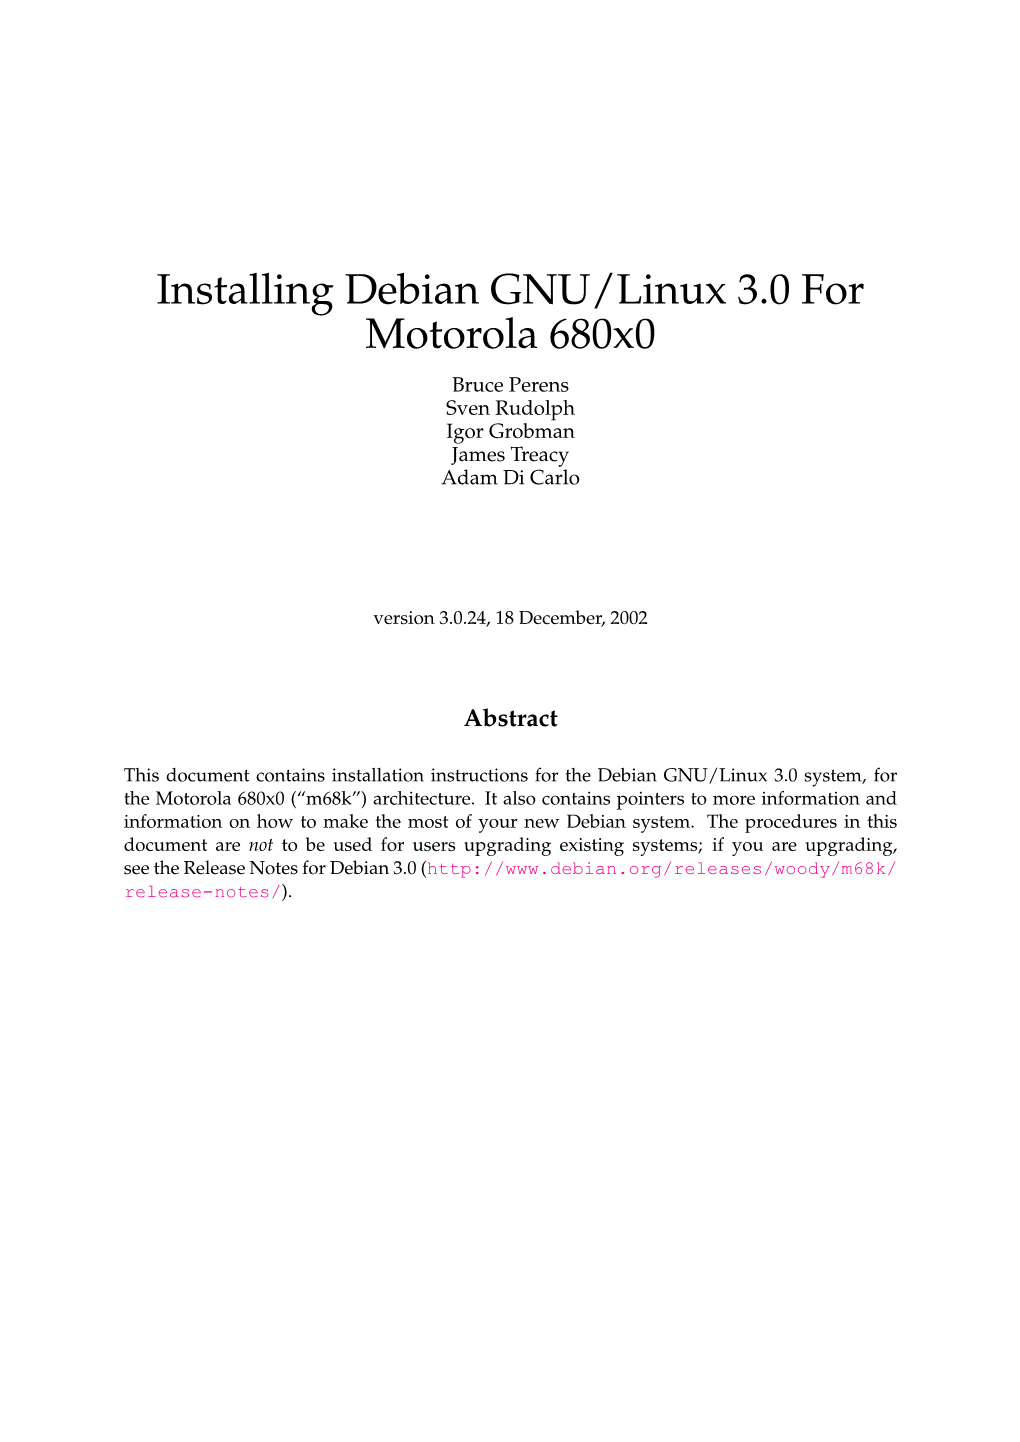 Installing Debian GNU/Linux 3.0 for Motorola 680X0 Bruce Perens Sven Rudolph Igor Grobman James Treacy Adam Di Carlo